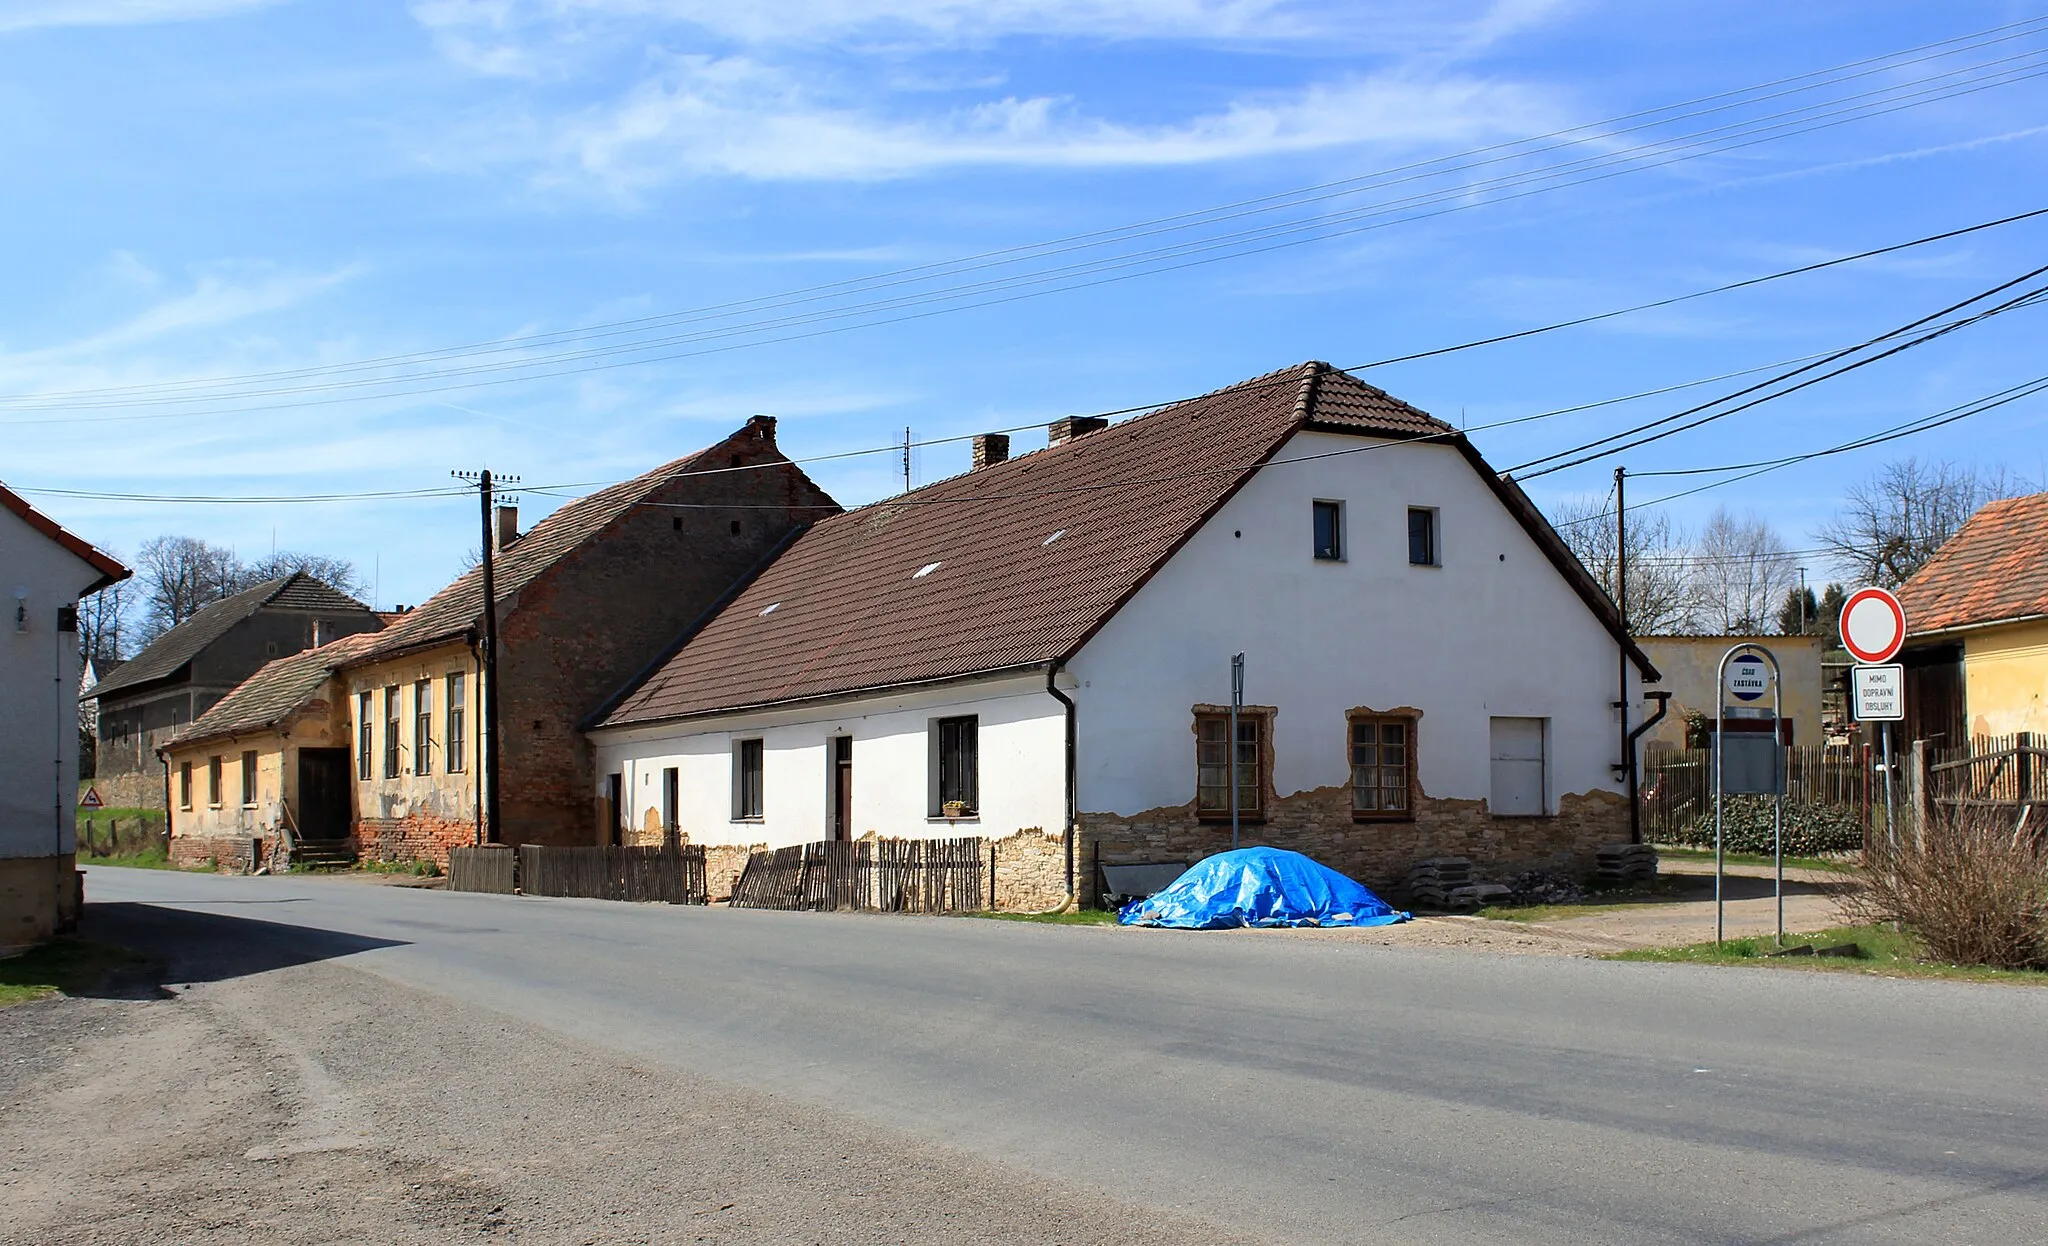 Photo showing: House No. 20 in Chomle village, Czech Republic.